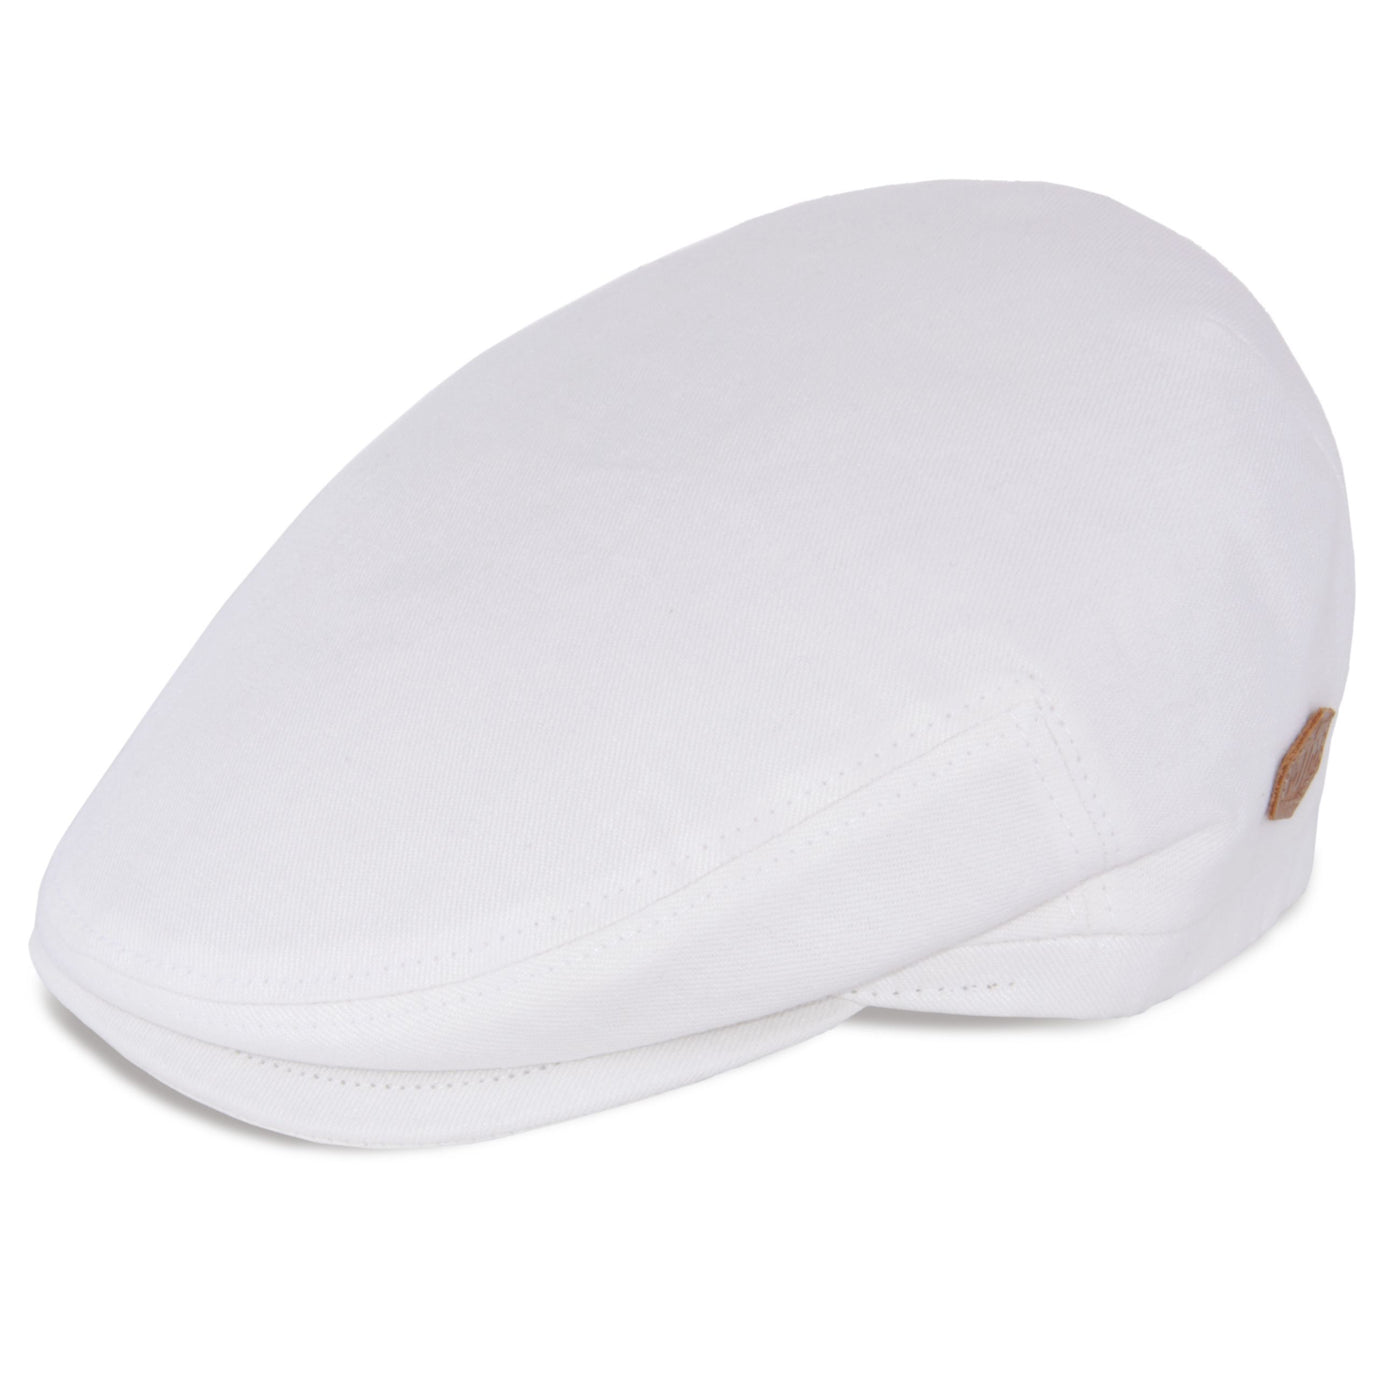 MJM Jordan Flat Cap - Økologisk Off White Hamp - Flat Cap fra MJM Hats hos The Prince Webshop